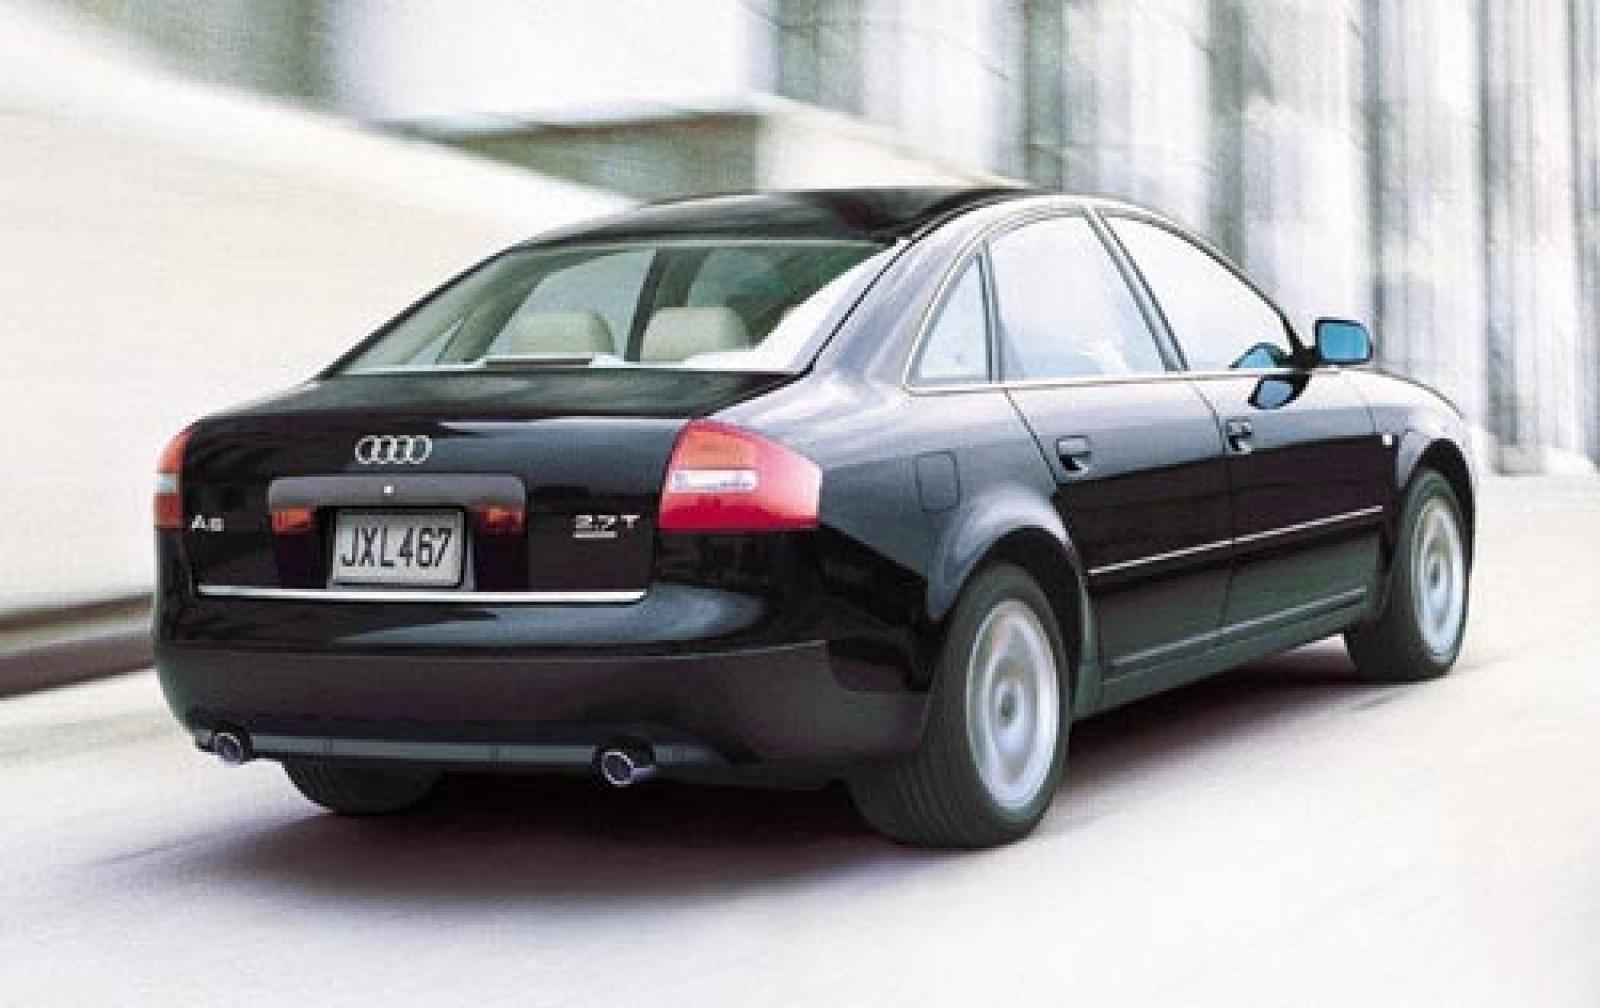 Ауди а6 1998 купить. Audi a6 2003. Audi a6 c5 2003. Ауди а6 2002. Audi a6 c5 2002.